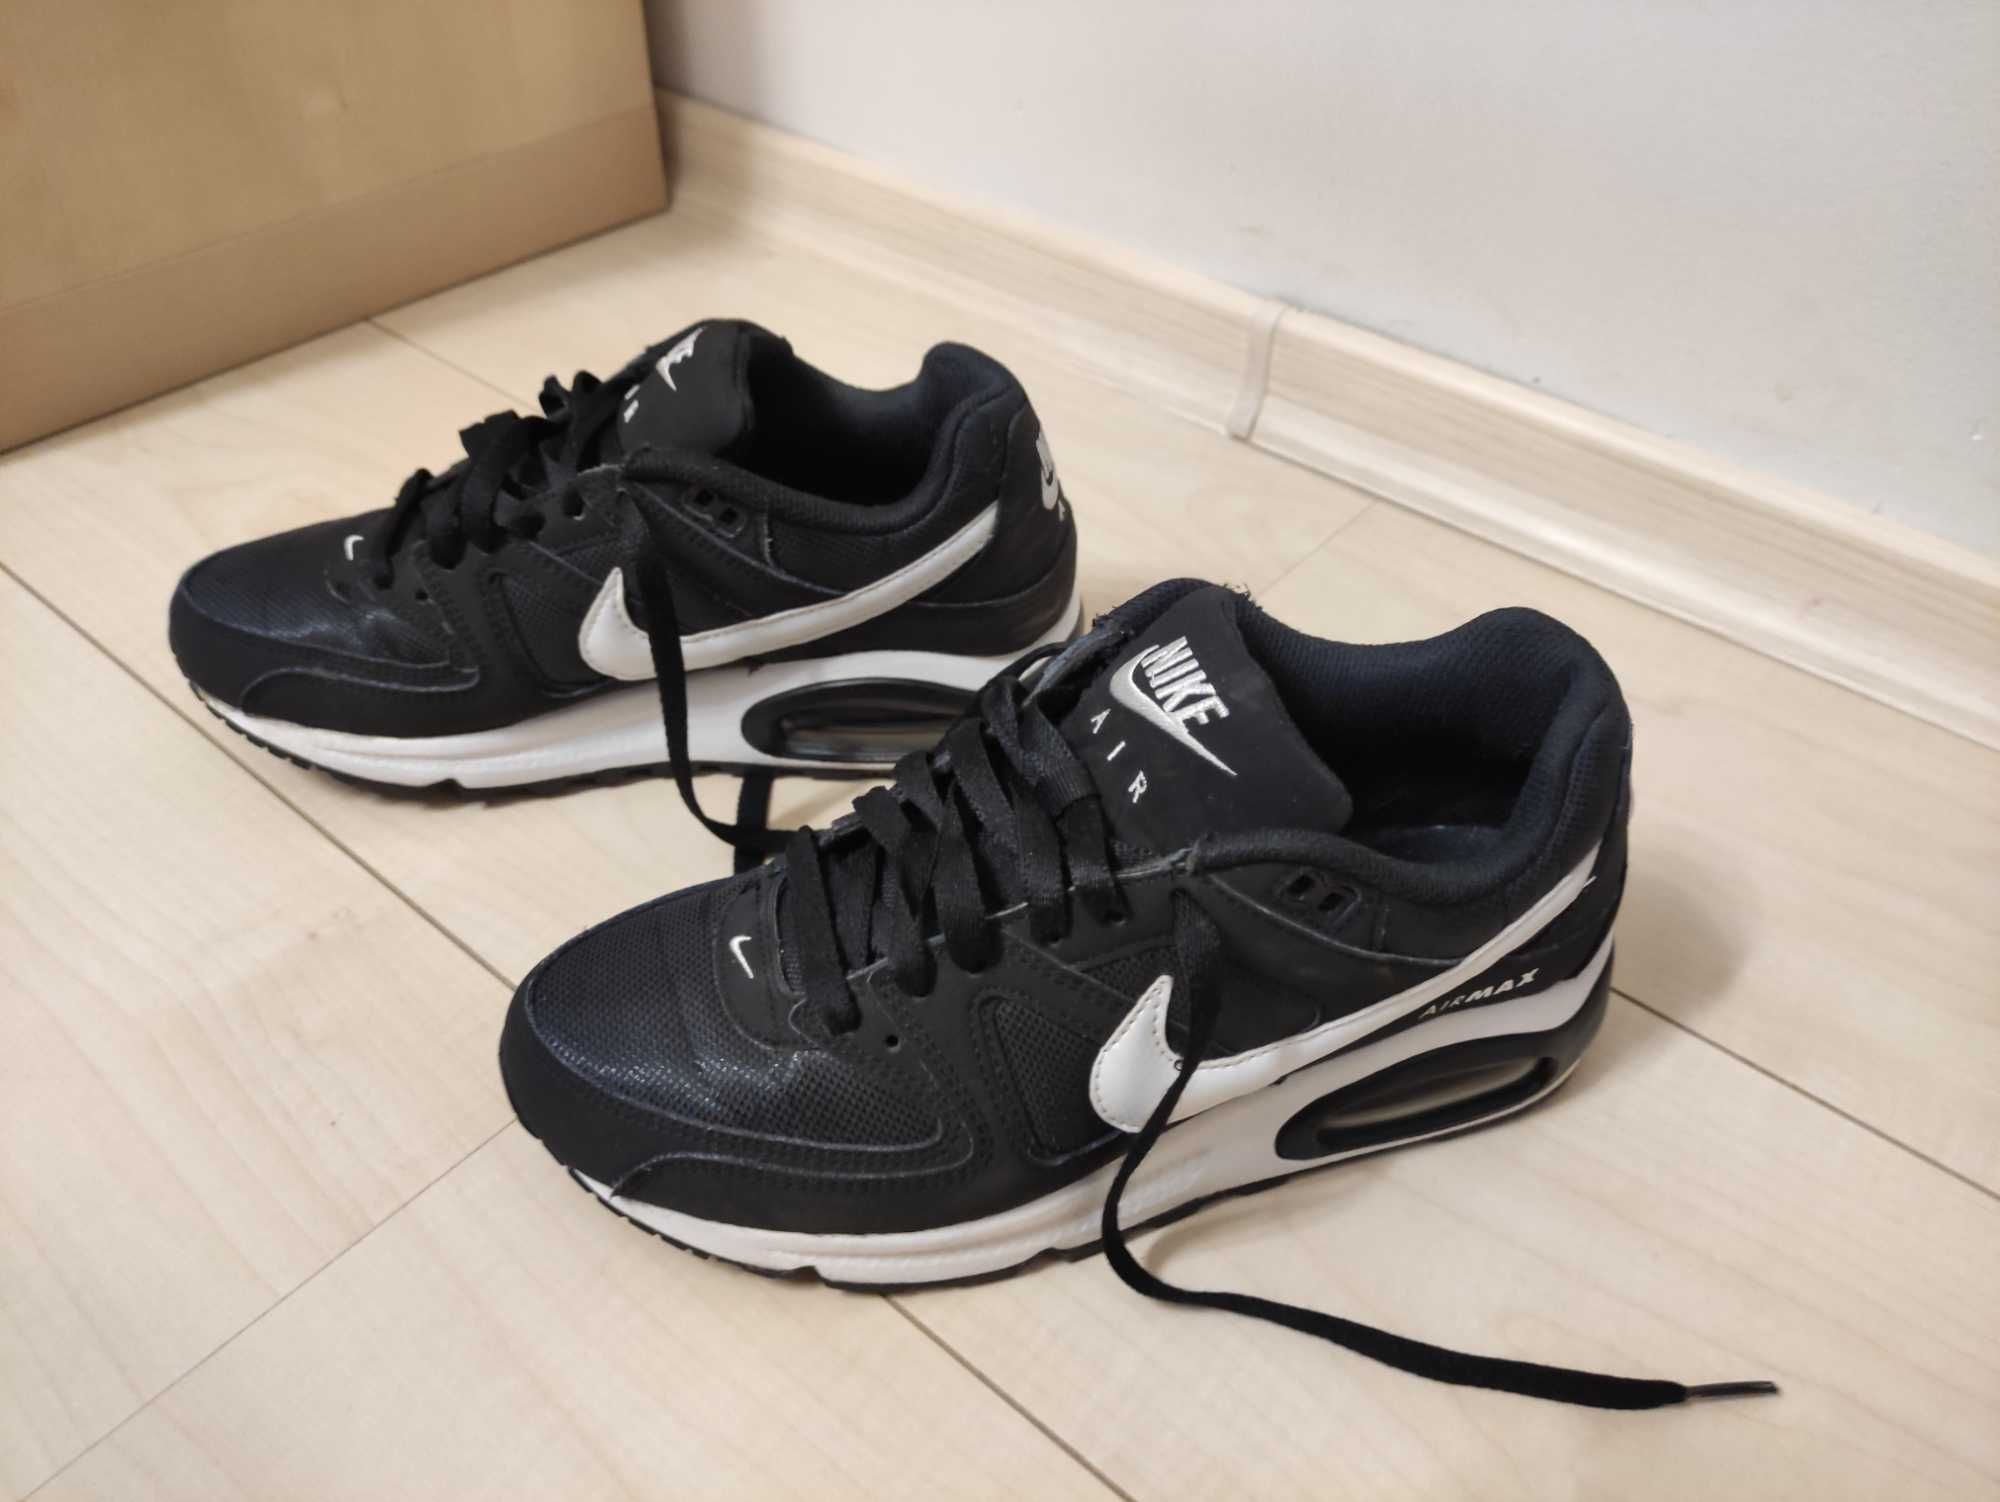 Damskie buty sportowe sneakersy Nike Air Max SC r. 38,5 24,5 cm bdb